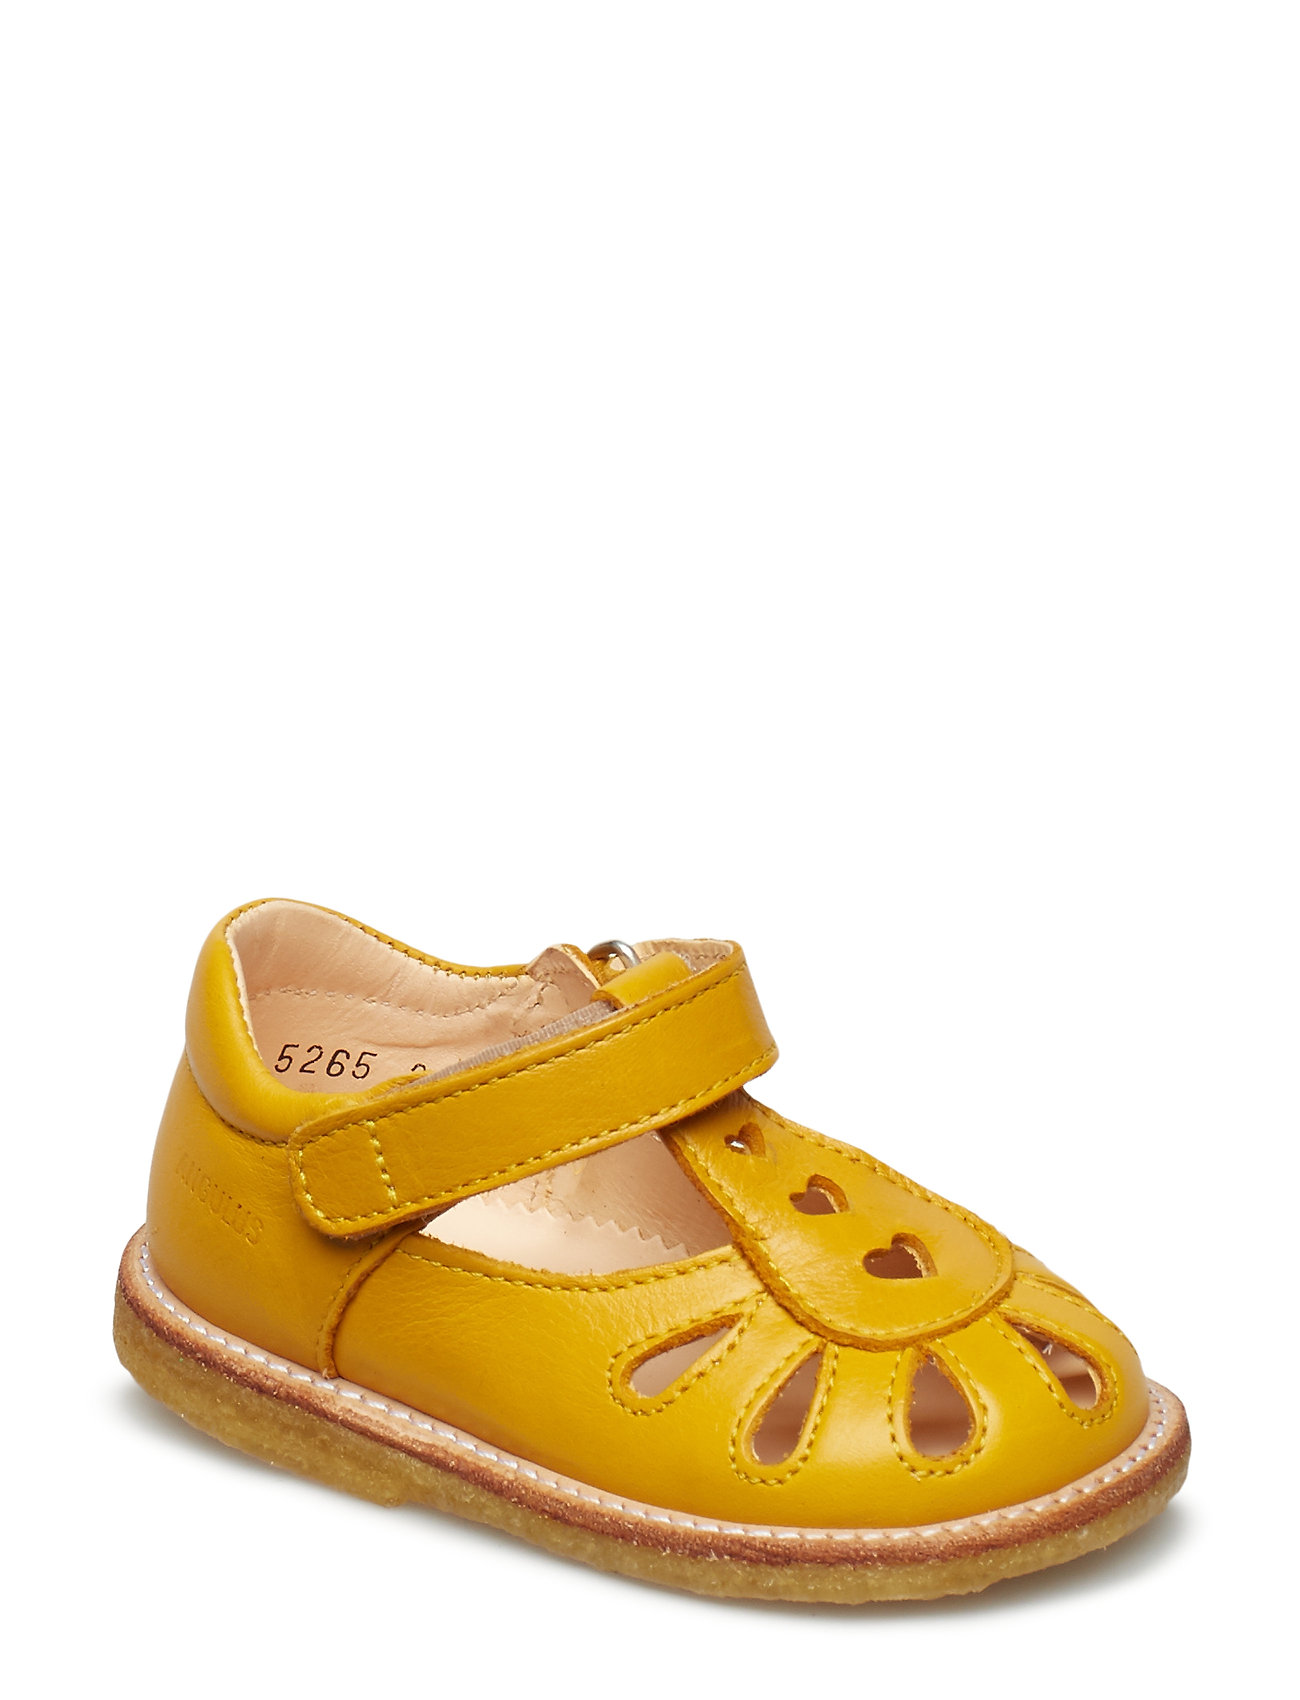 Sandals - Flat - Closed Toe - Shoes Summer Shoes Sandals Keltainen ANGULUS